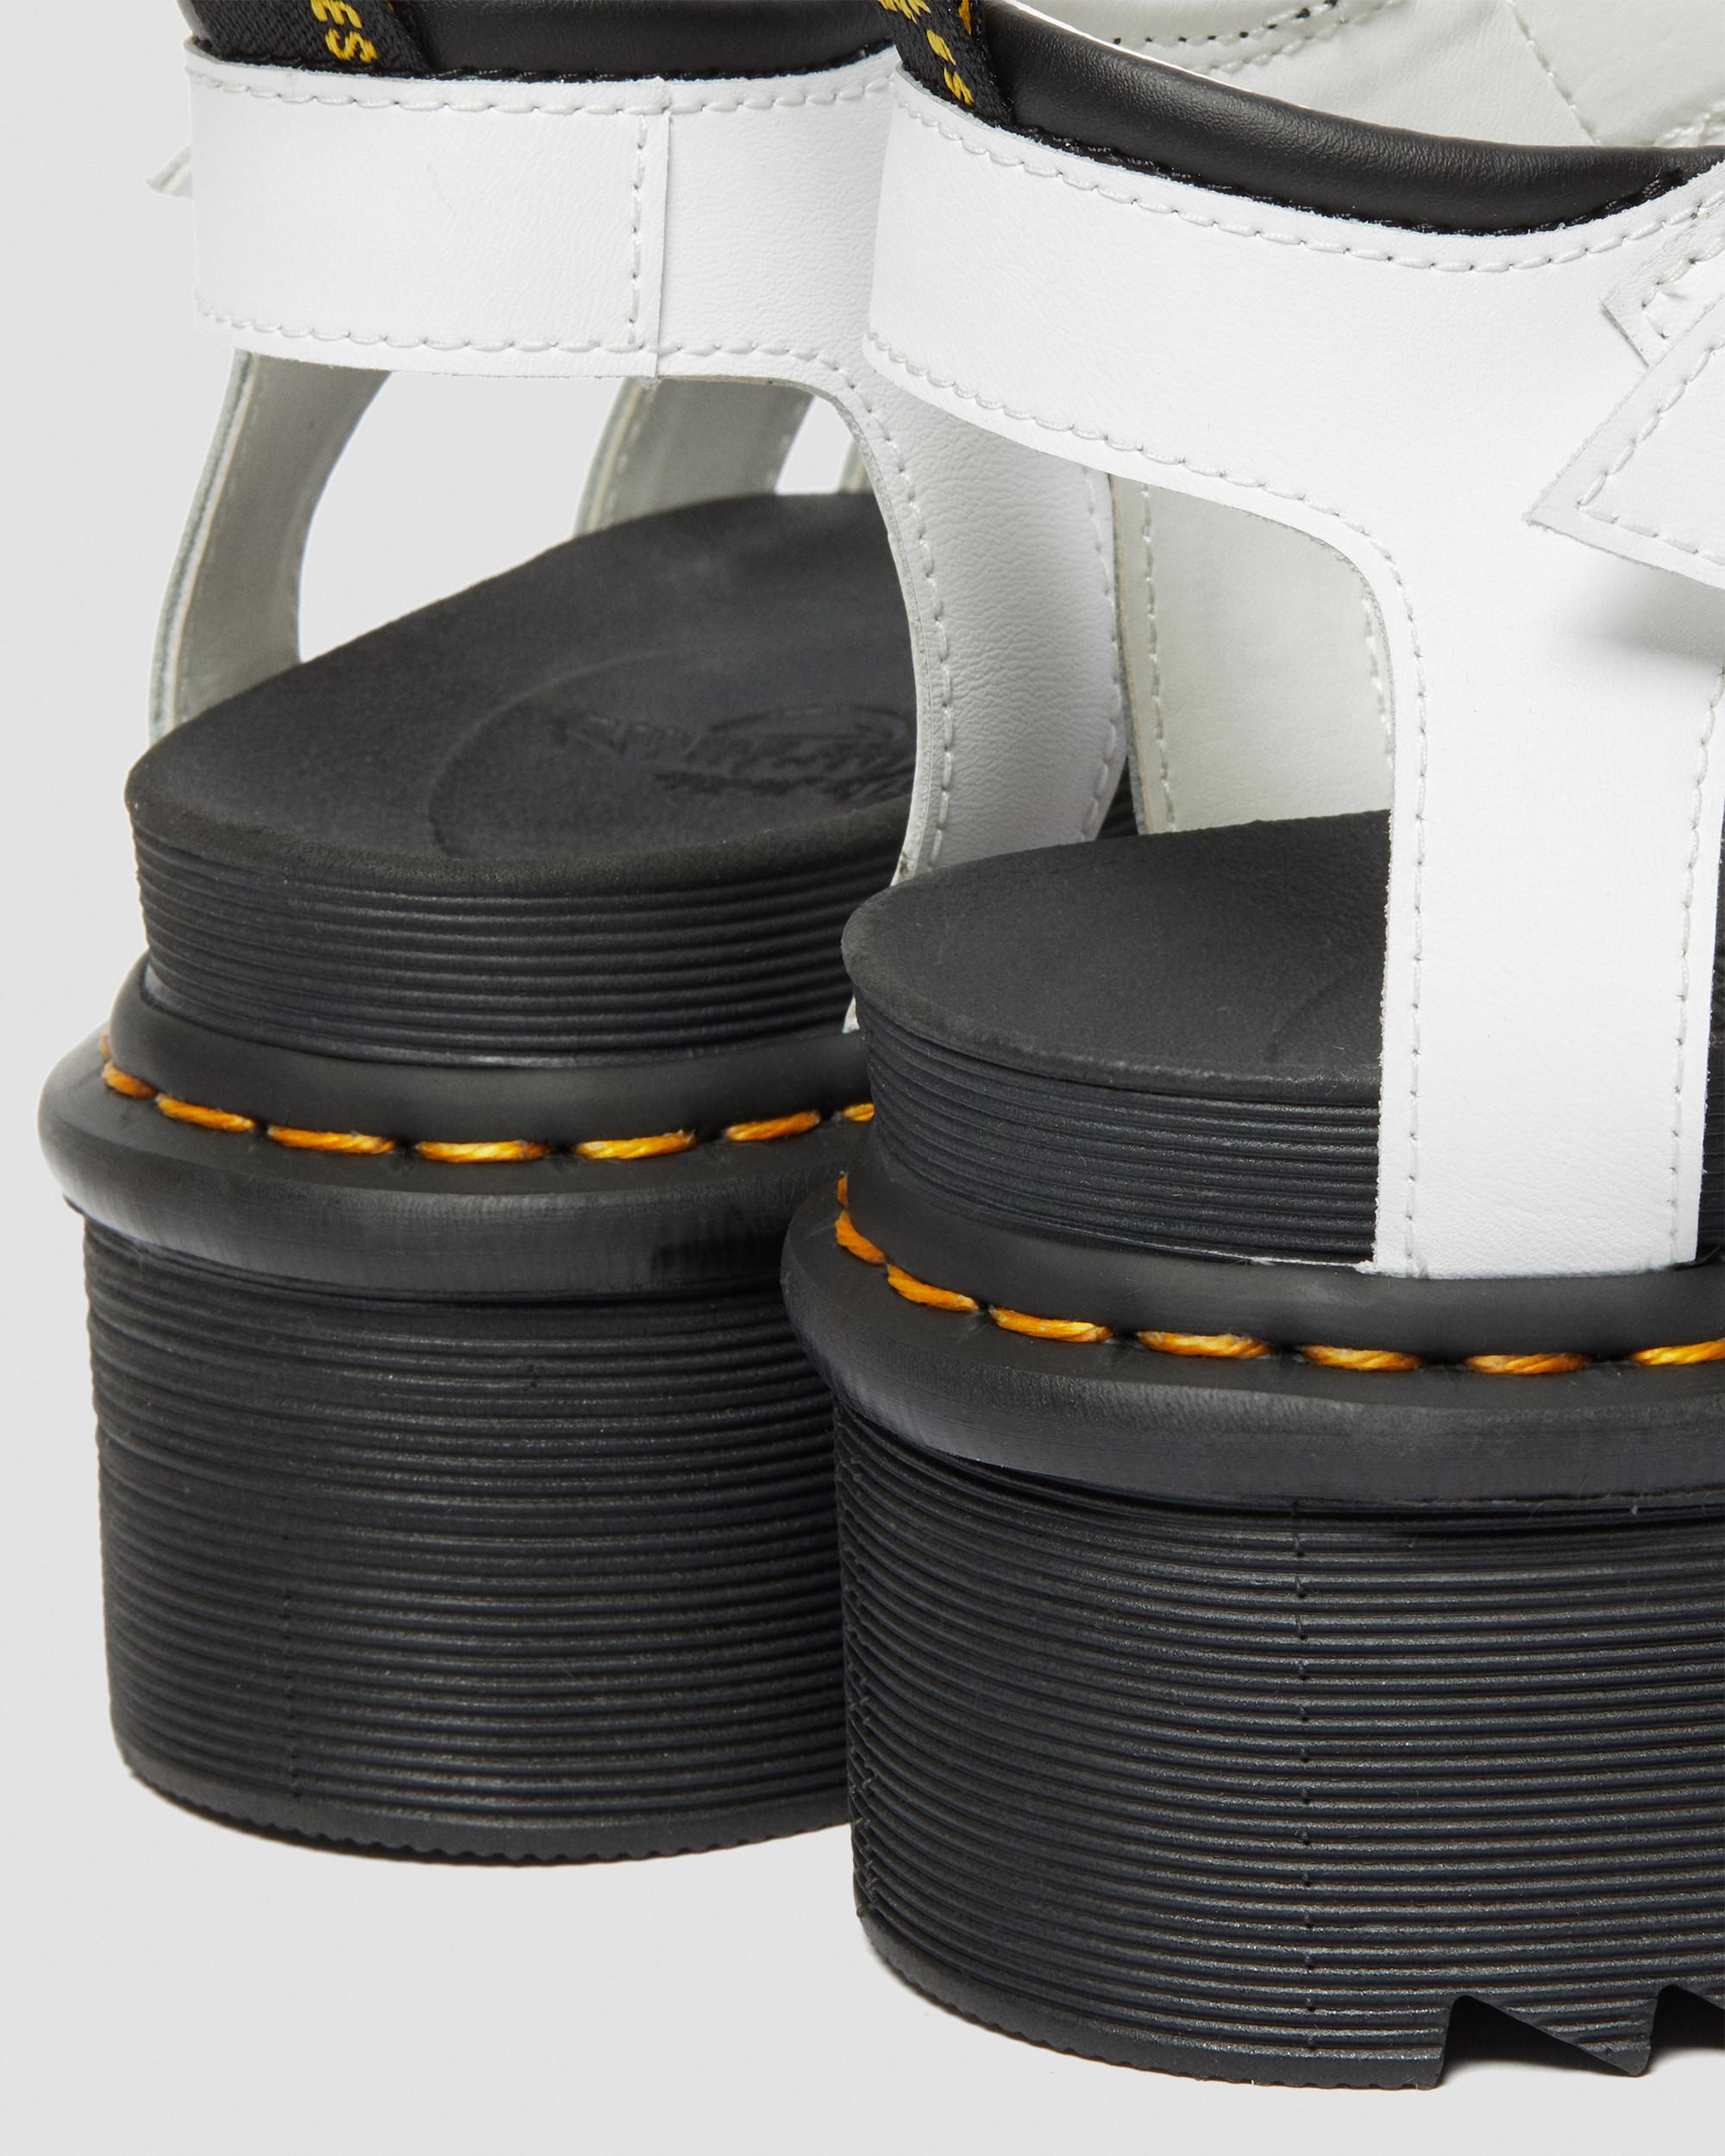 Blaire Quad Hydro Leather Platform Gladiator Sandals in White